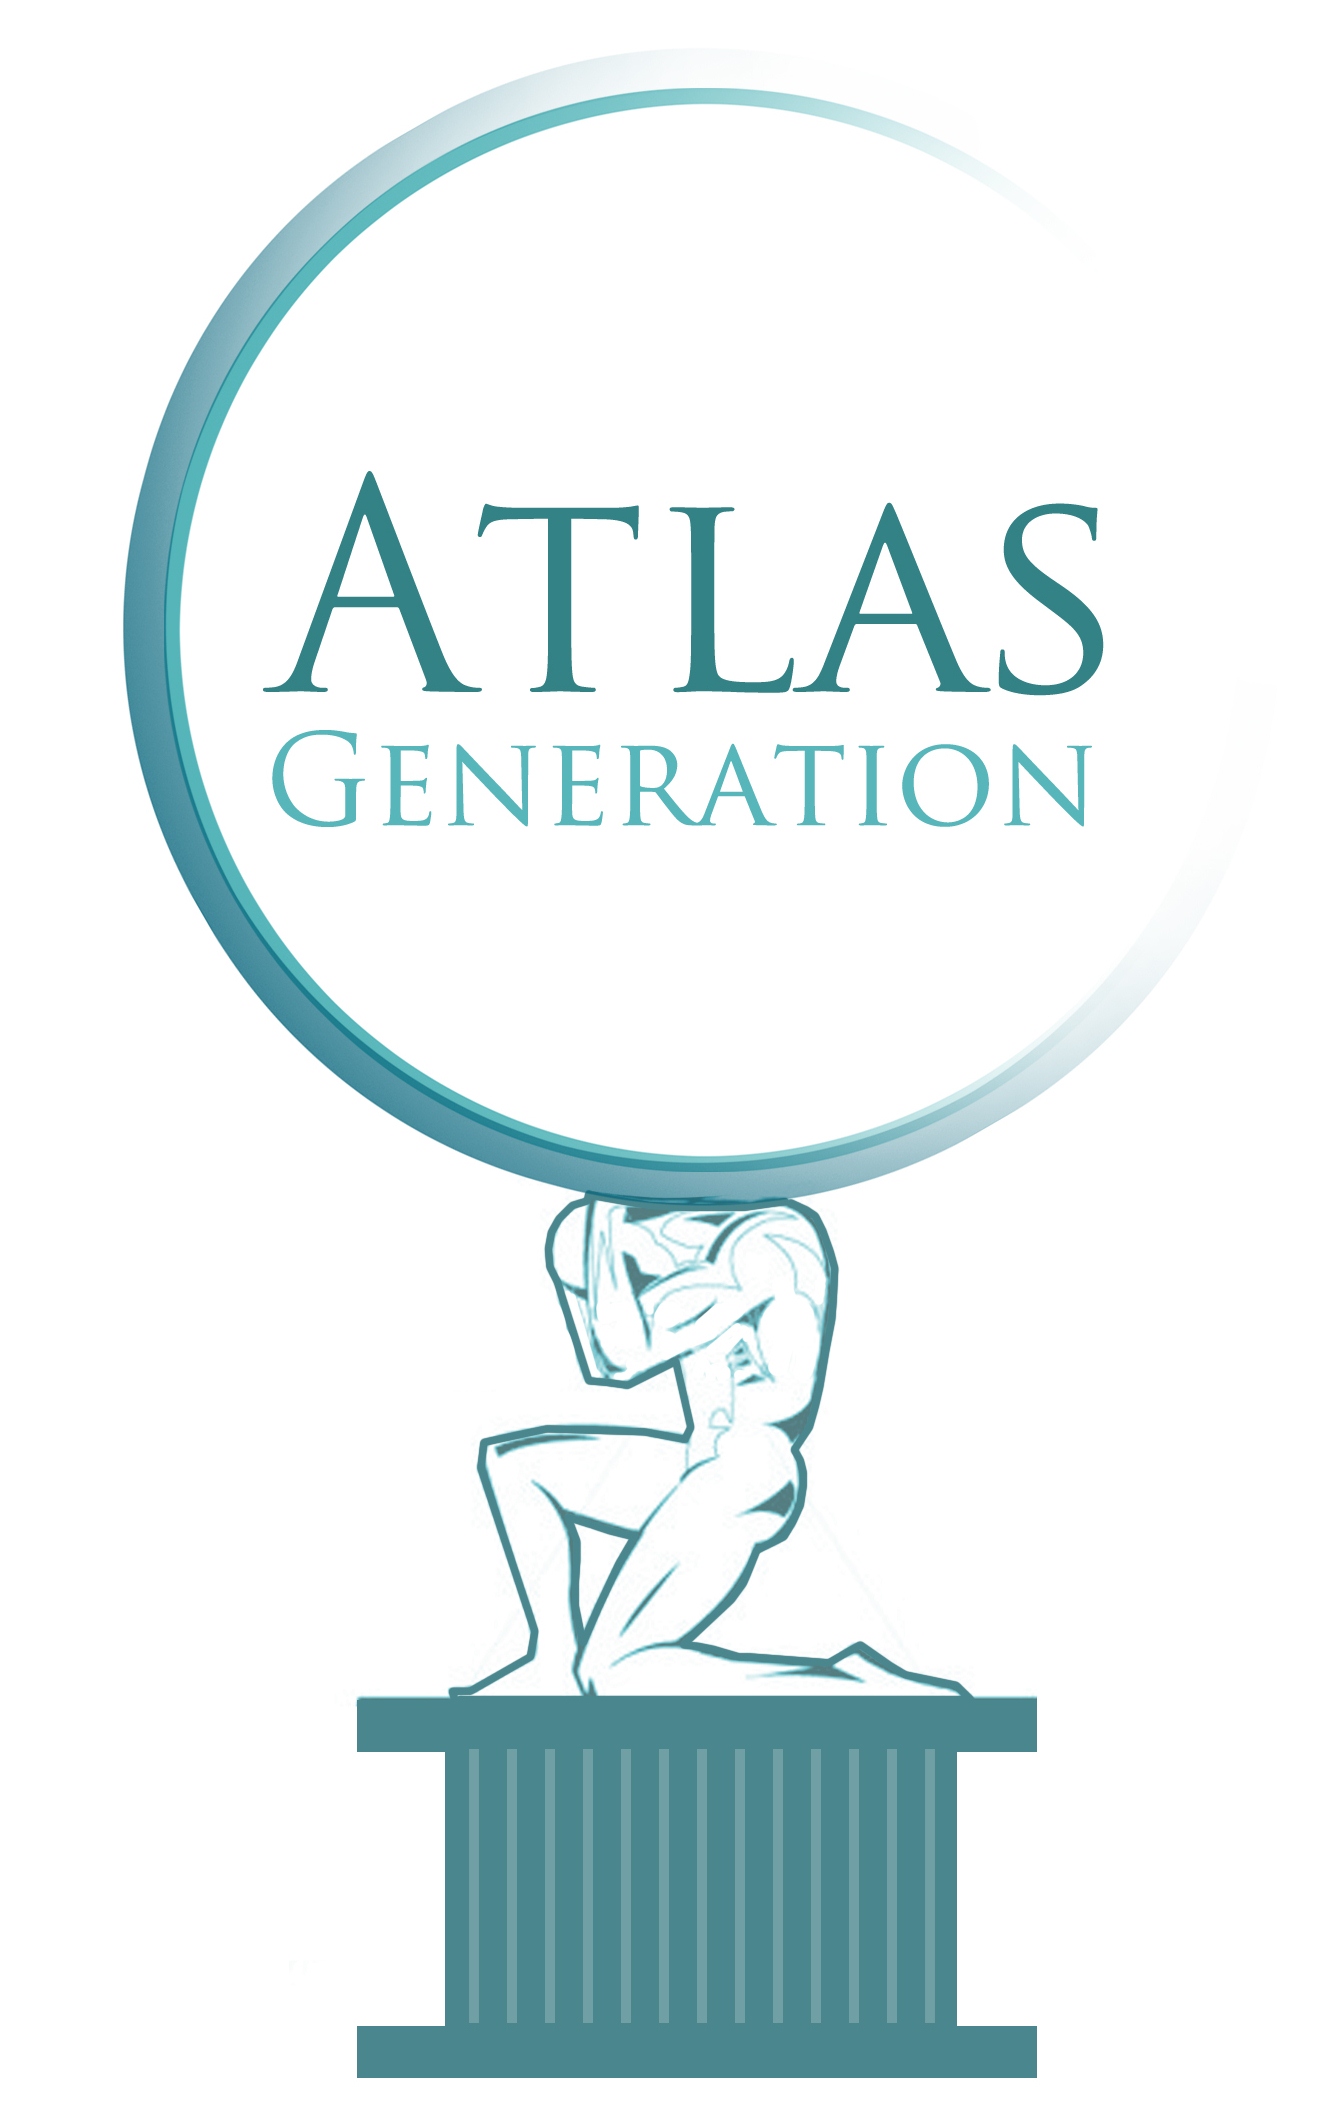 Atalas Logo photo - 1